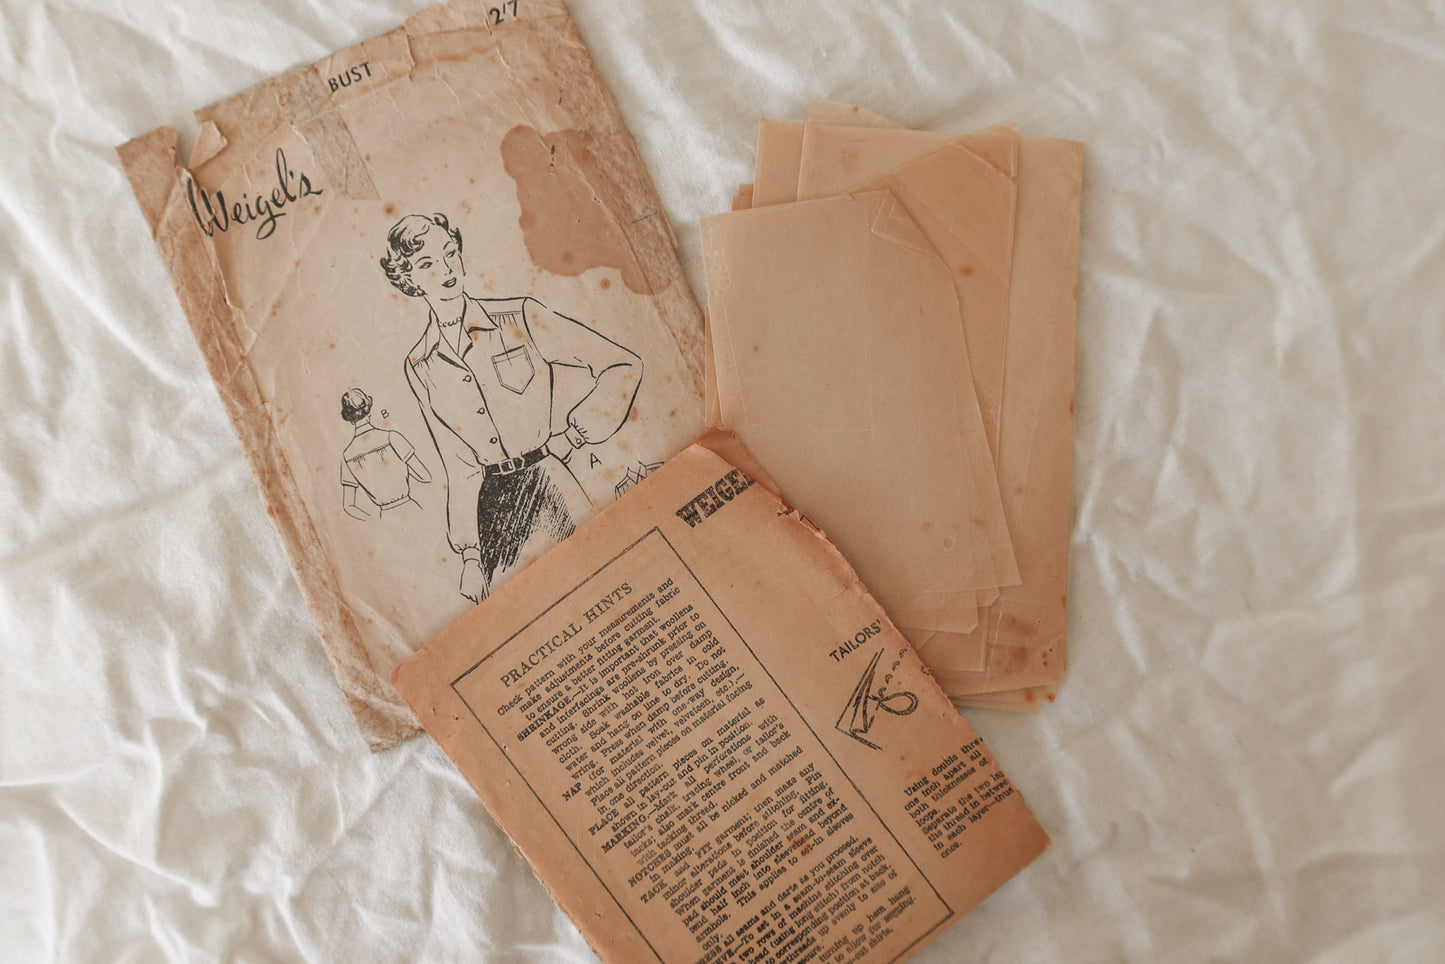 Miss Weigel's 1940s Blouse Sewing Pattern